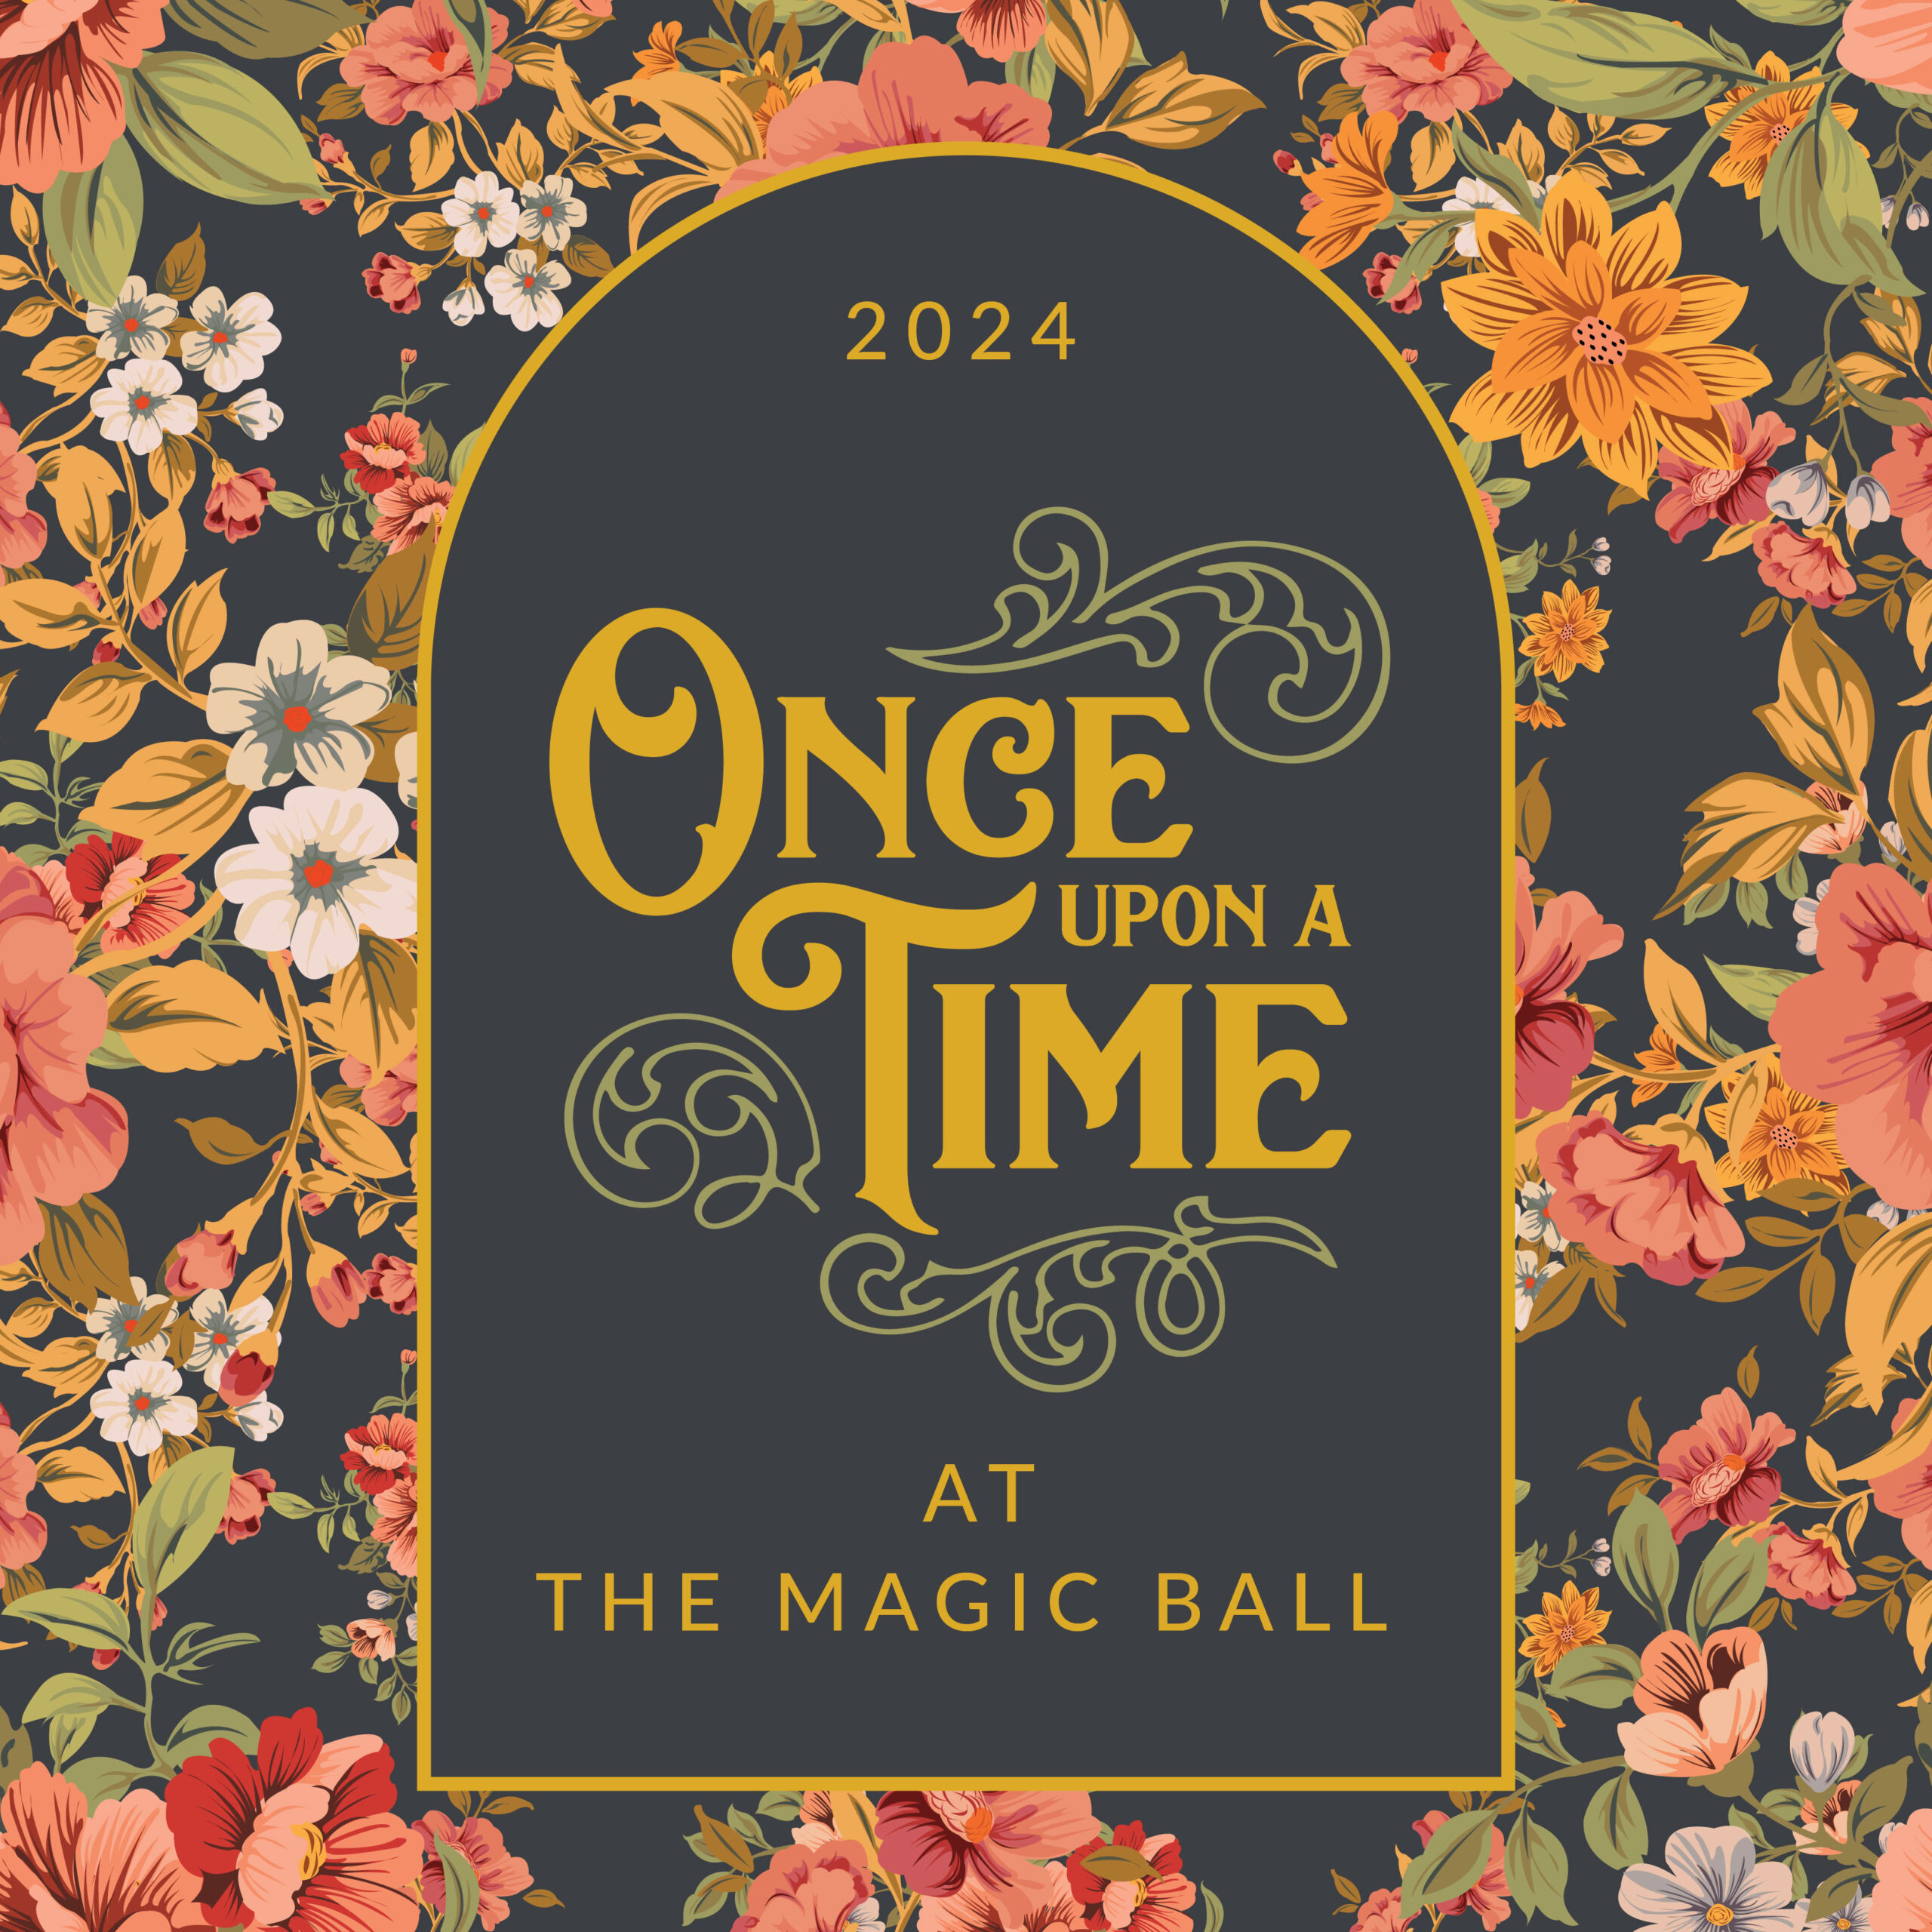 The Magic Ball Annual Fundraising Gala